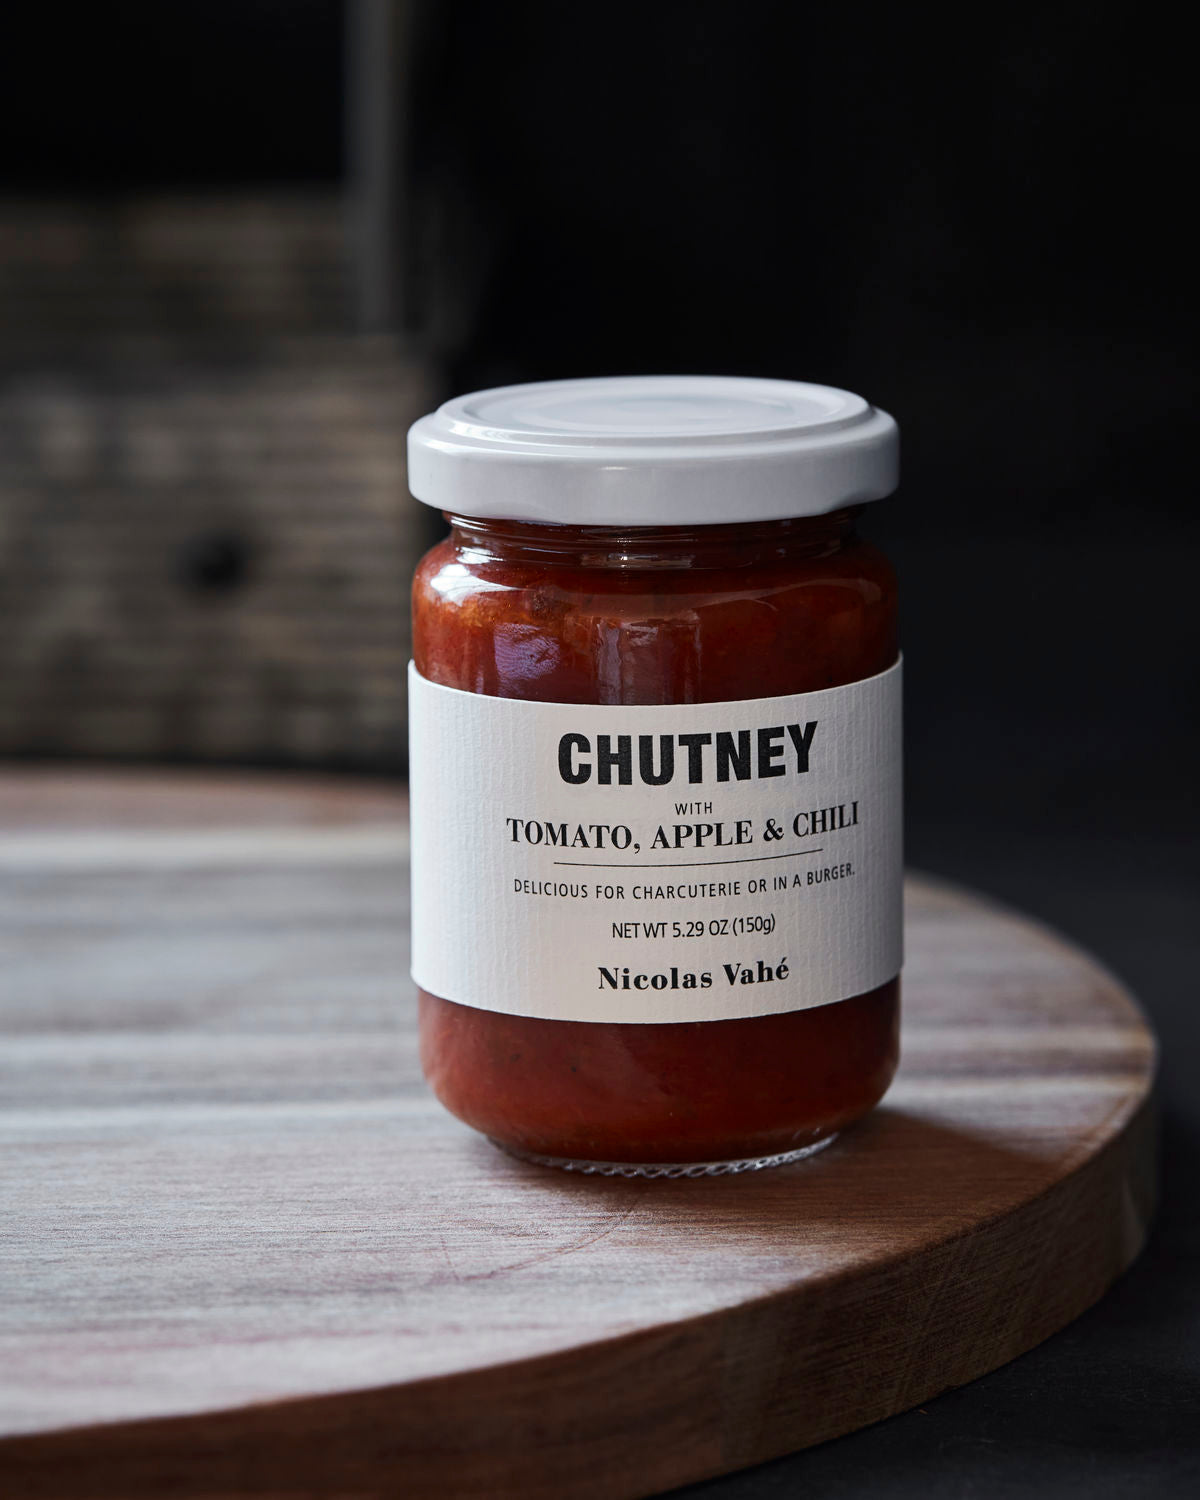 Chutney, Tomato, Apple & Chili by Nicolas Vahe